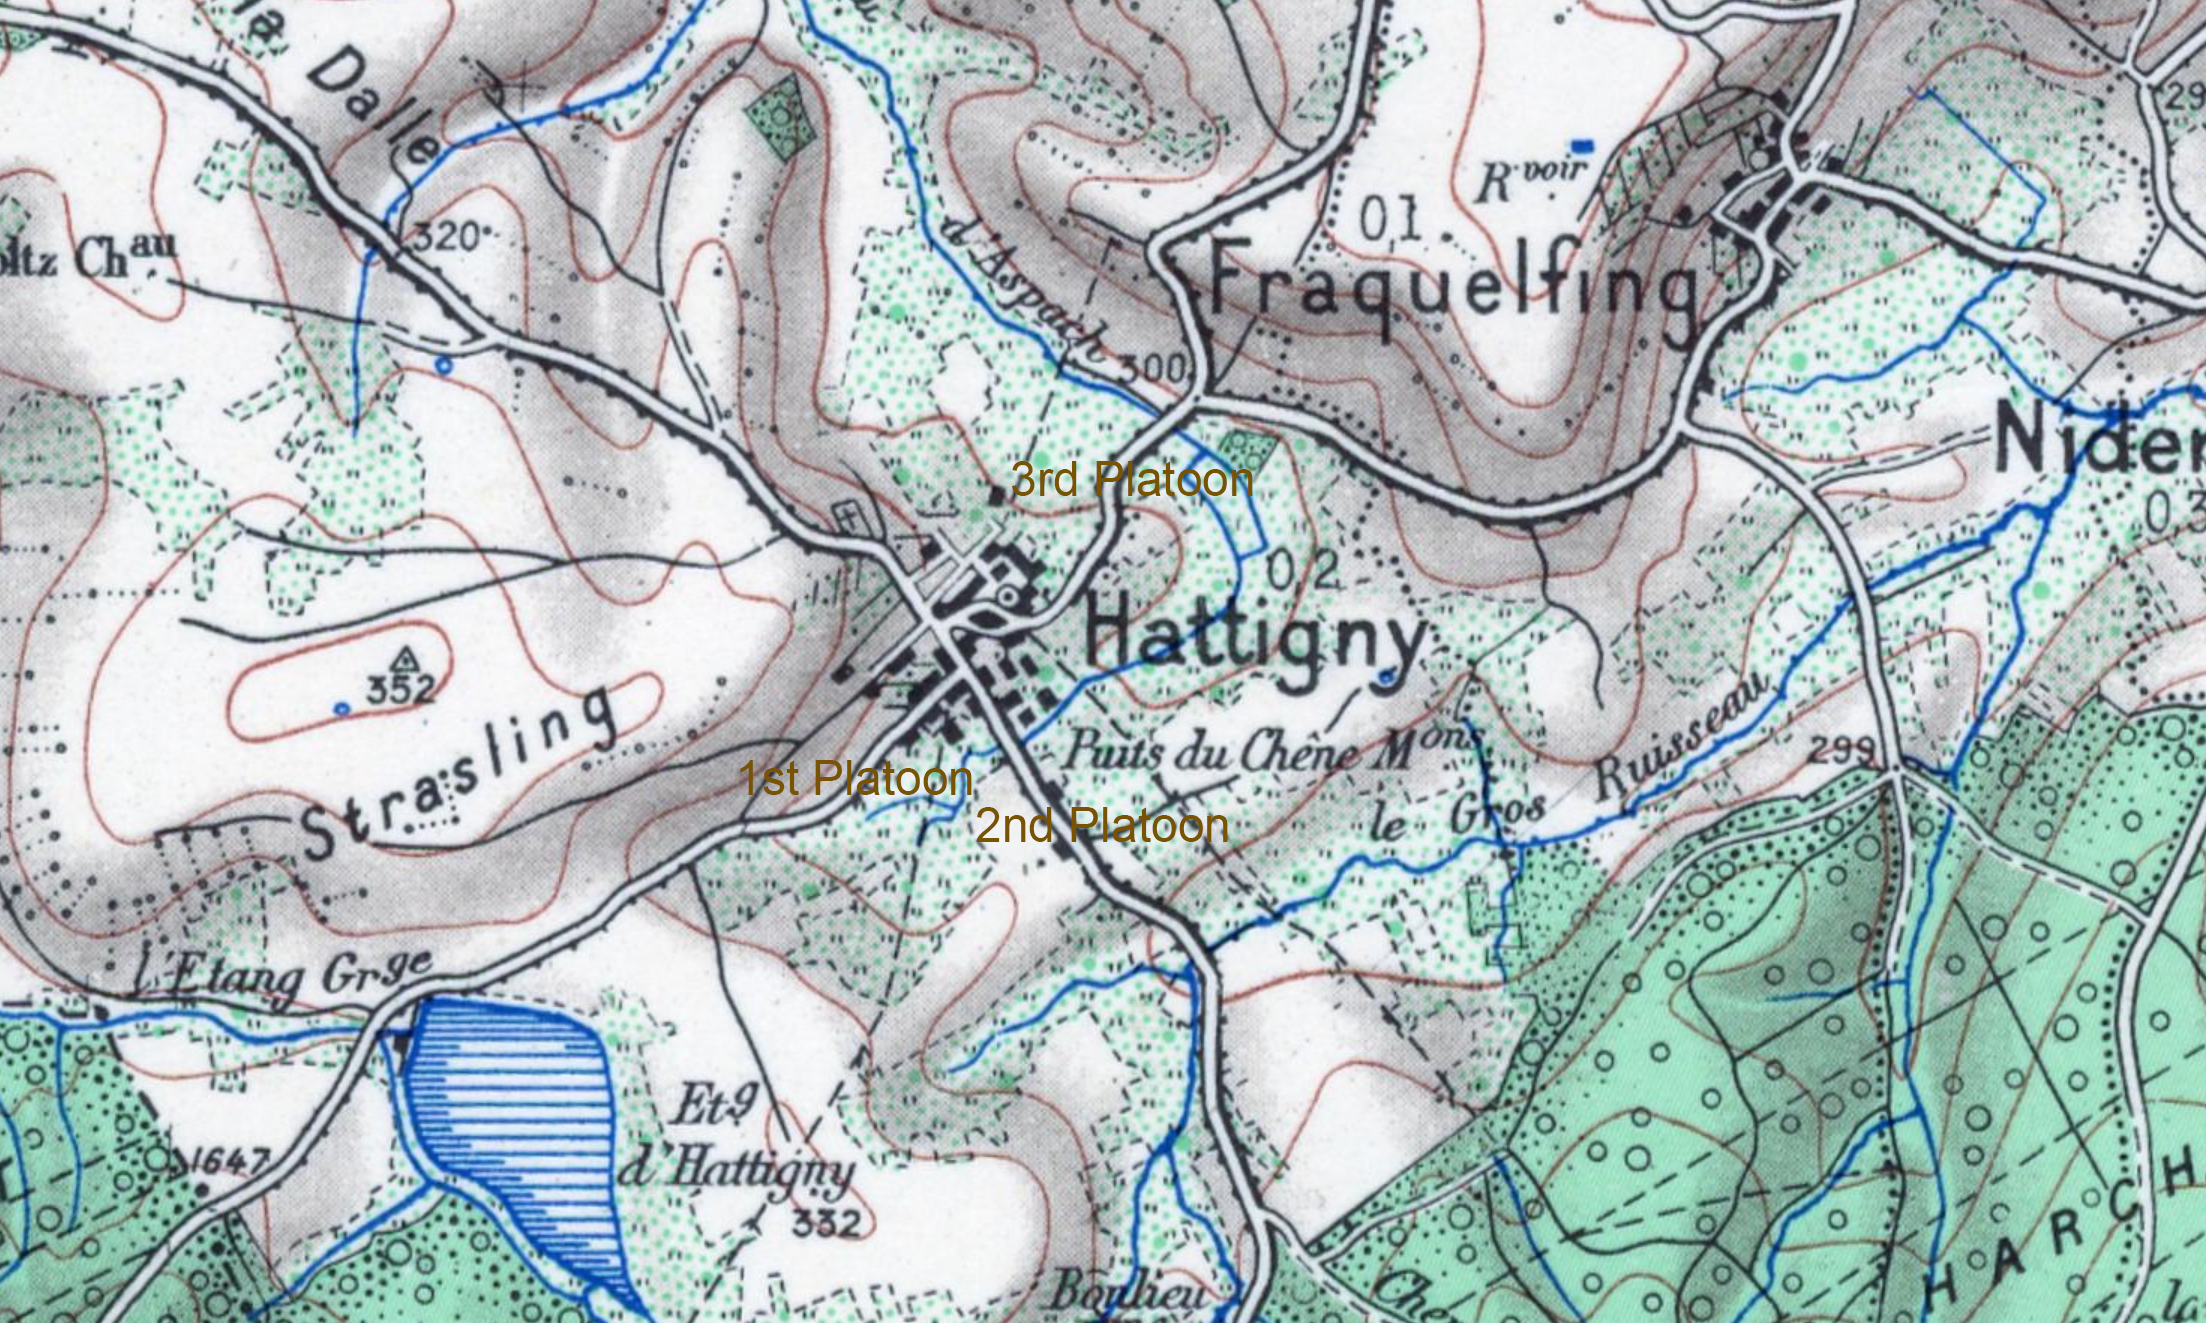 Hattigny (Positions of "B" Company's platoons)